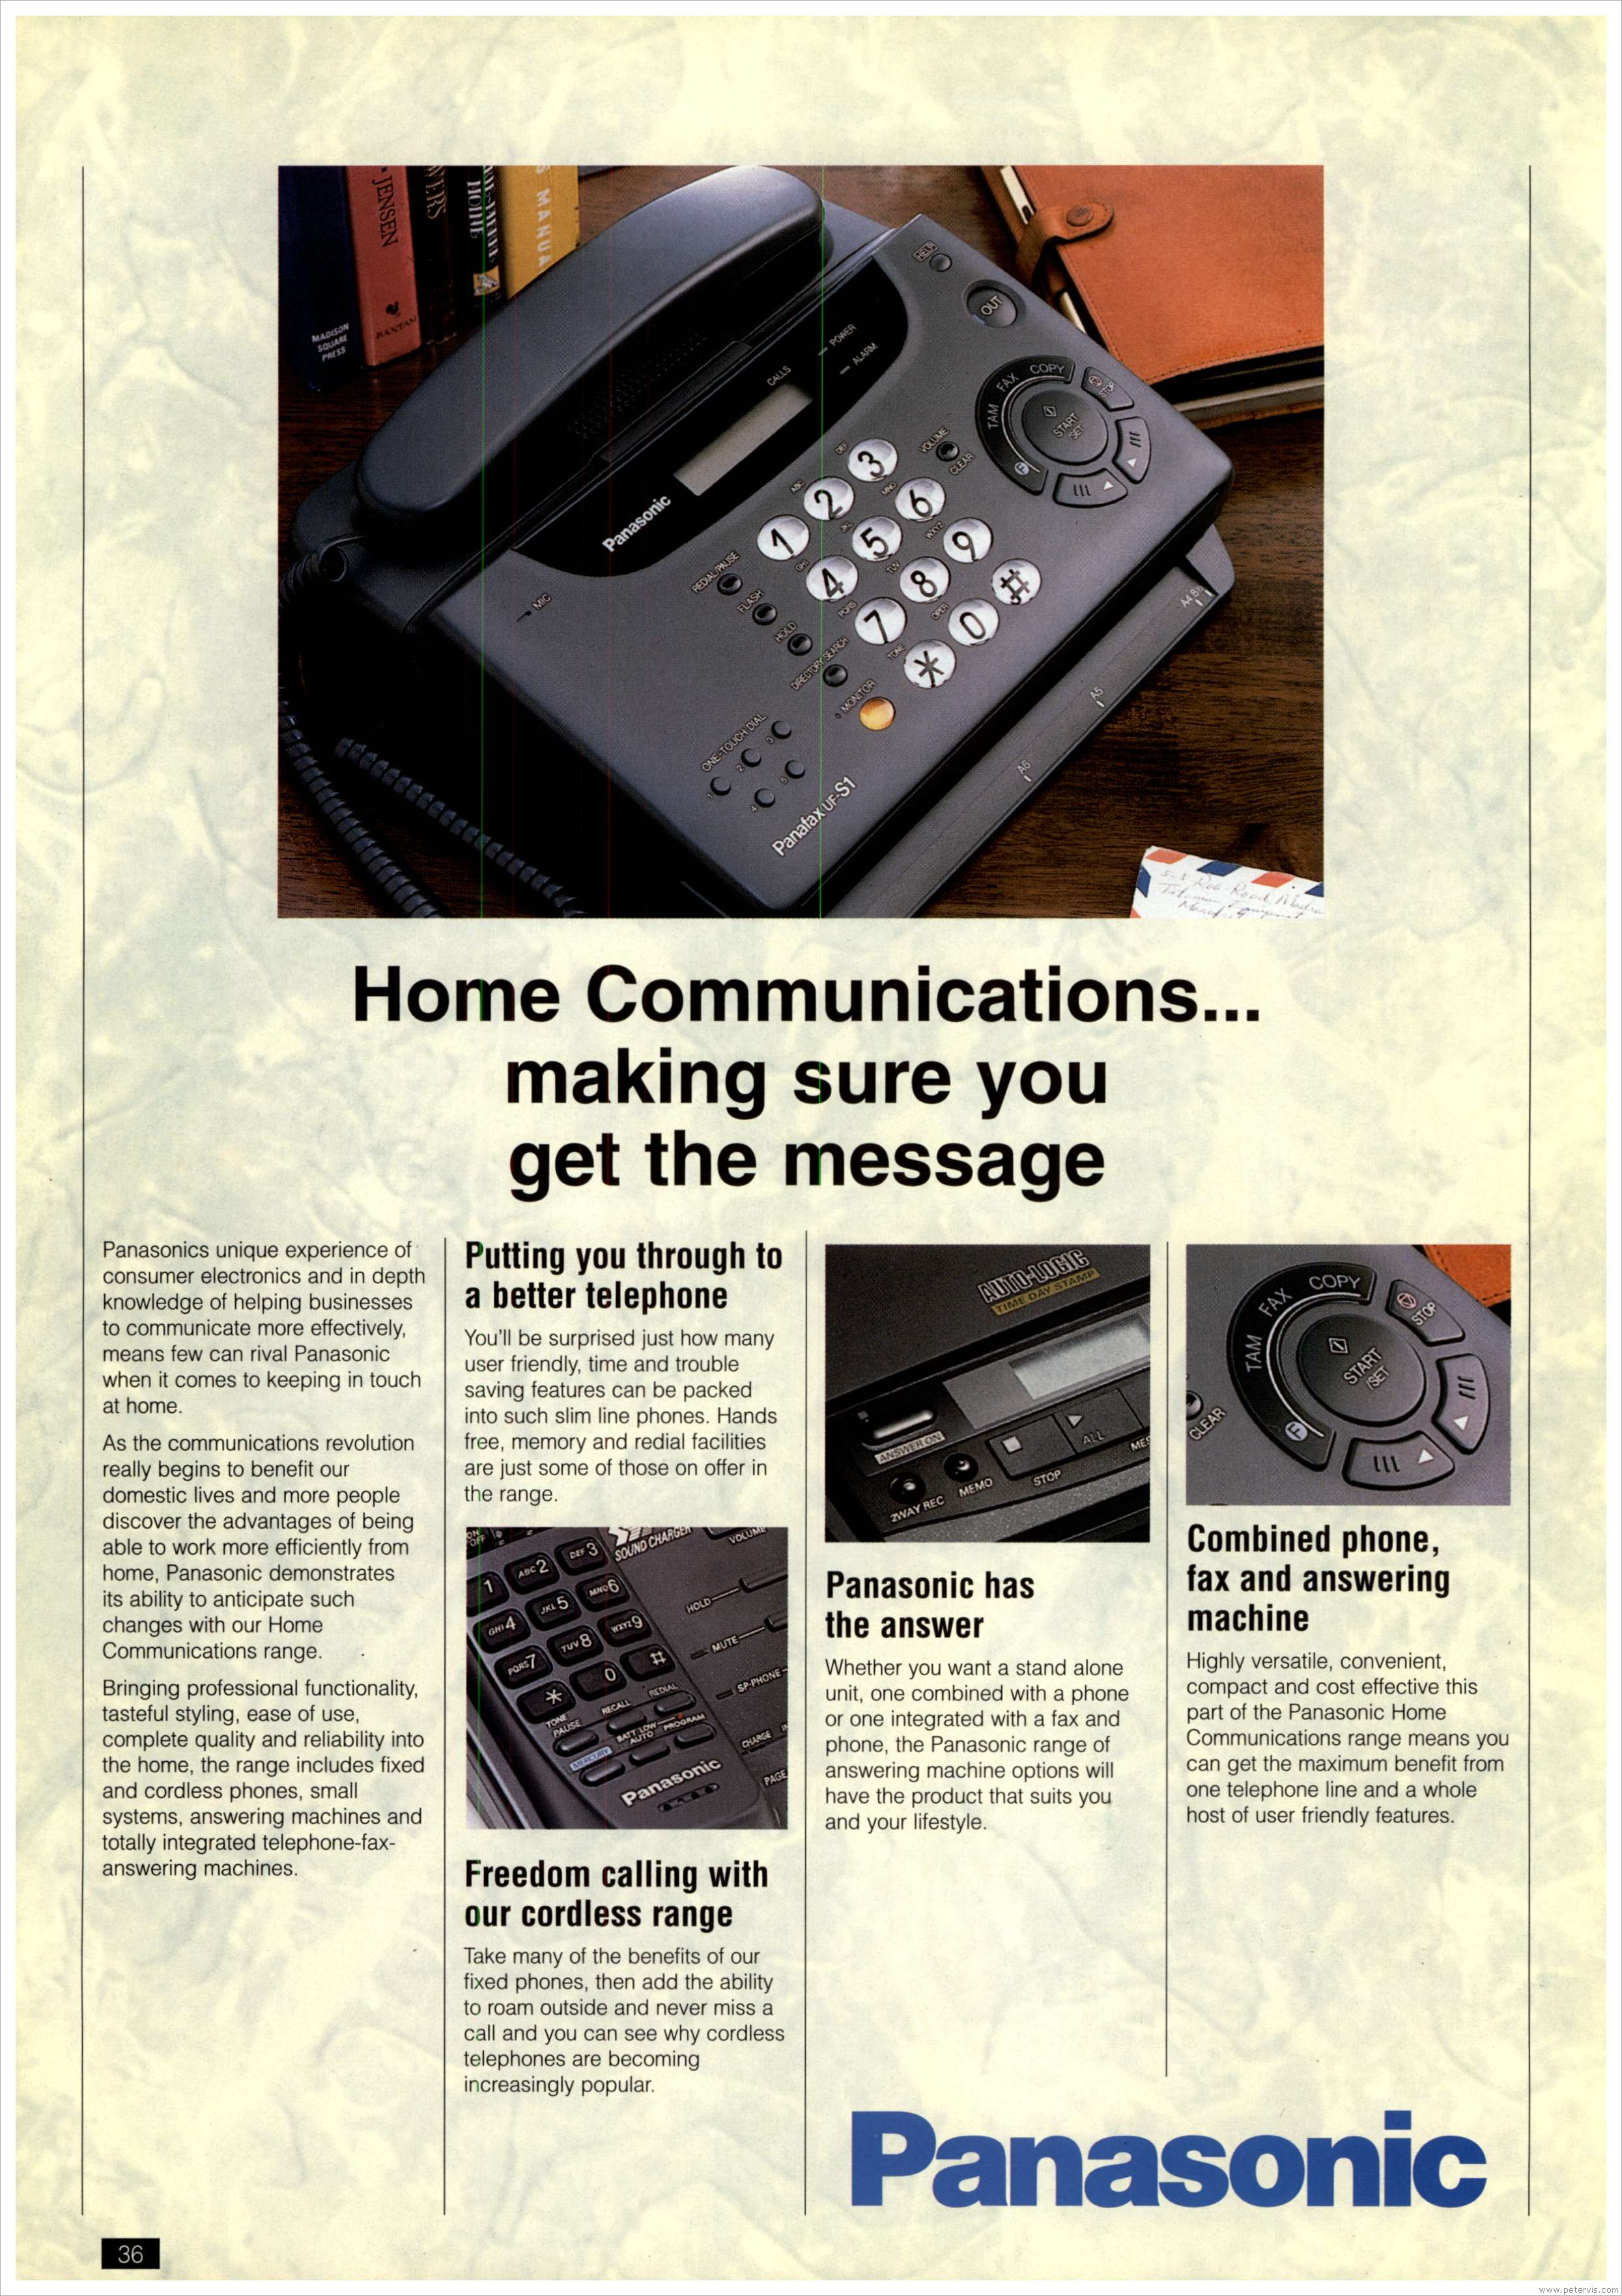 Home Communications